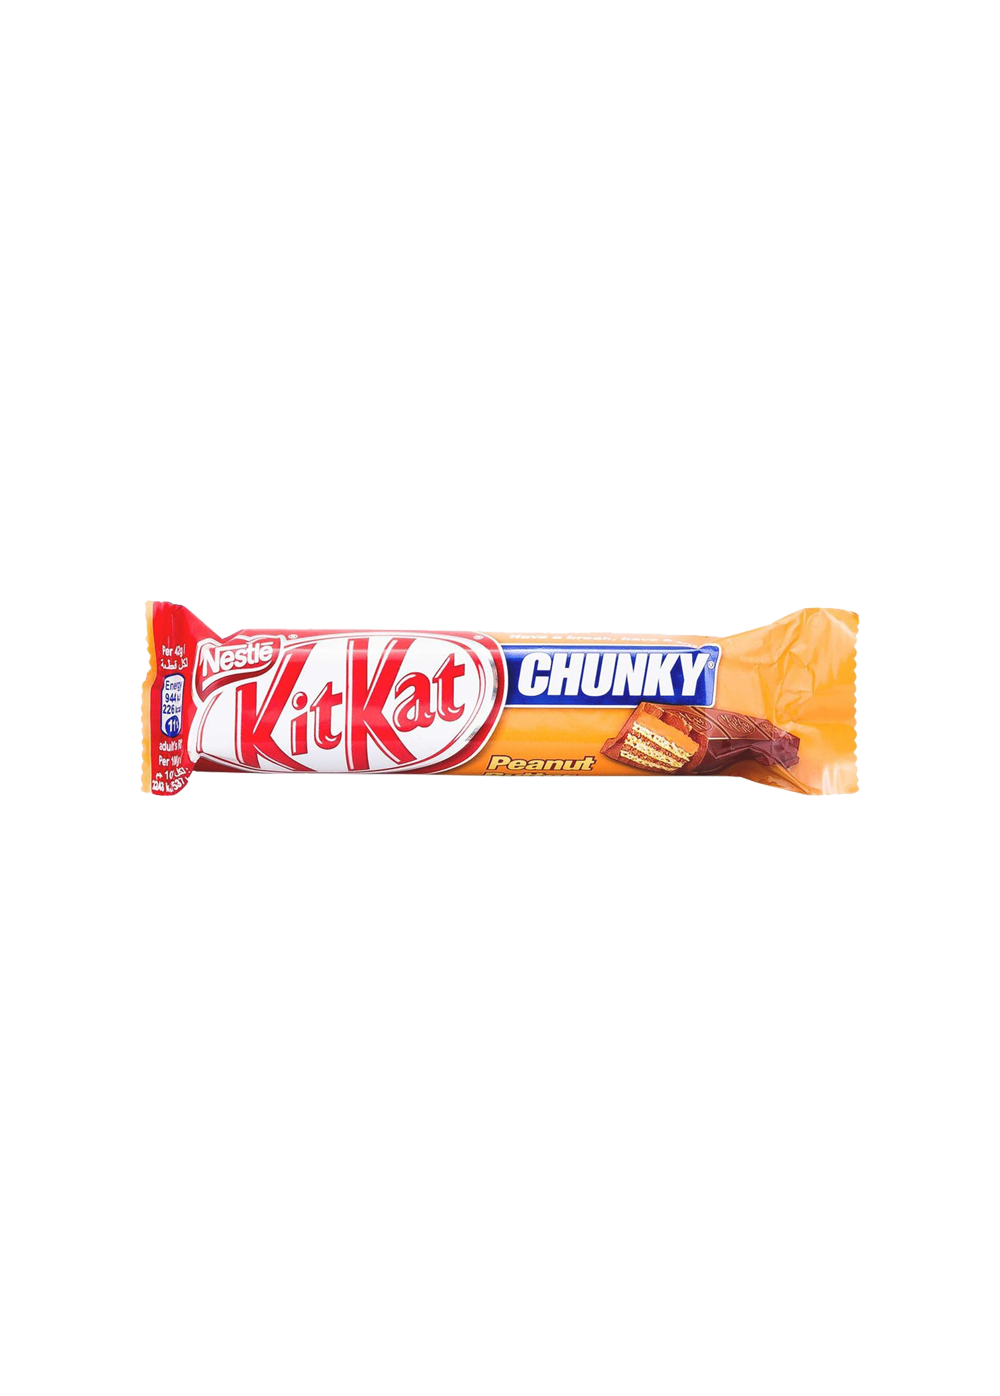 Nestle KitKat Chunky Peanut Butter 42g